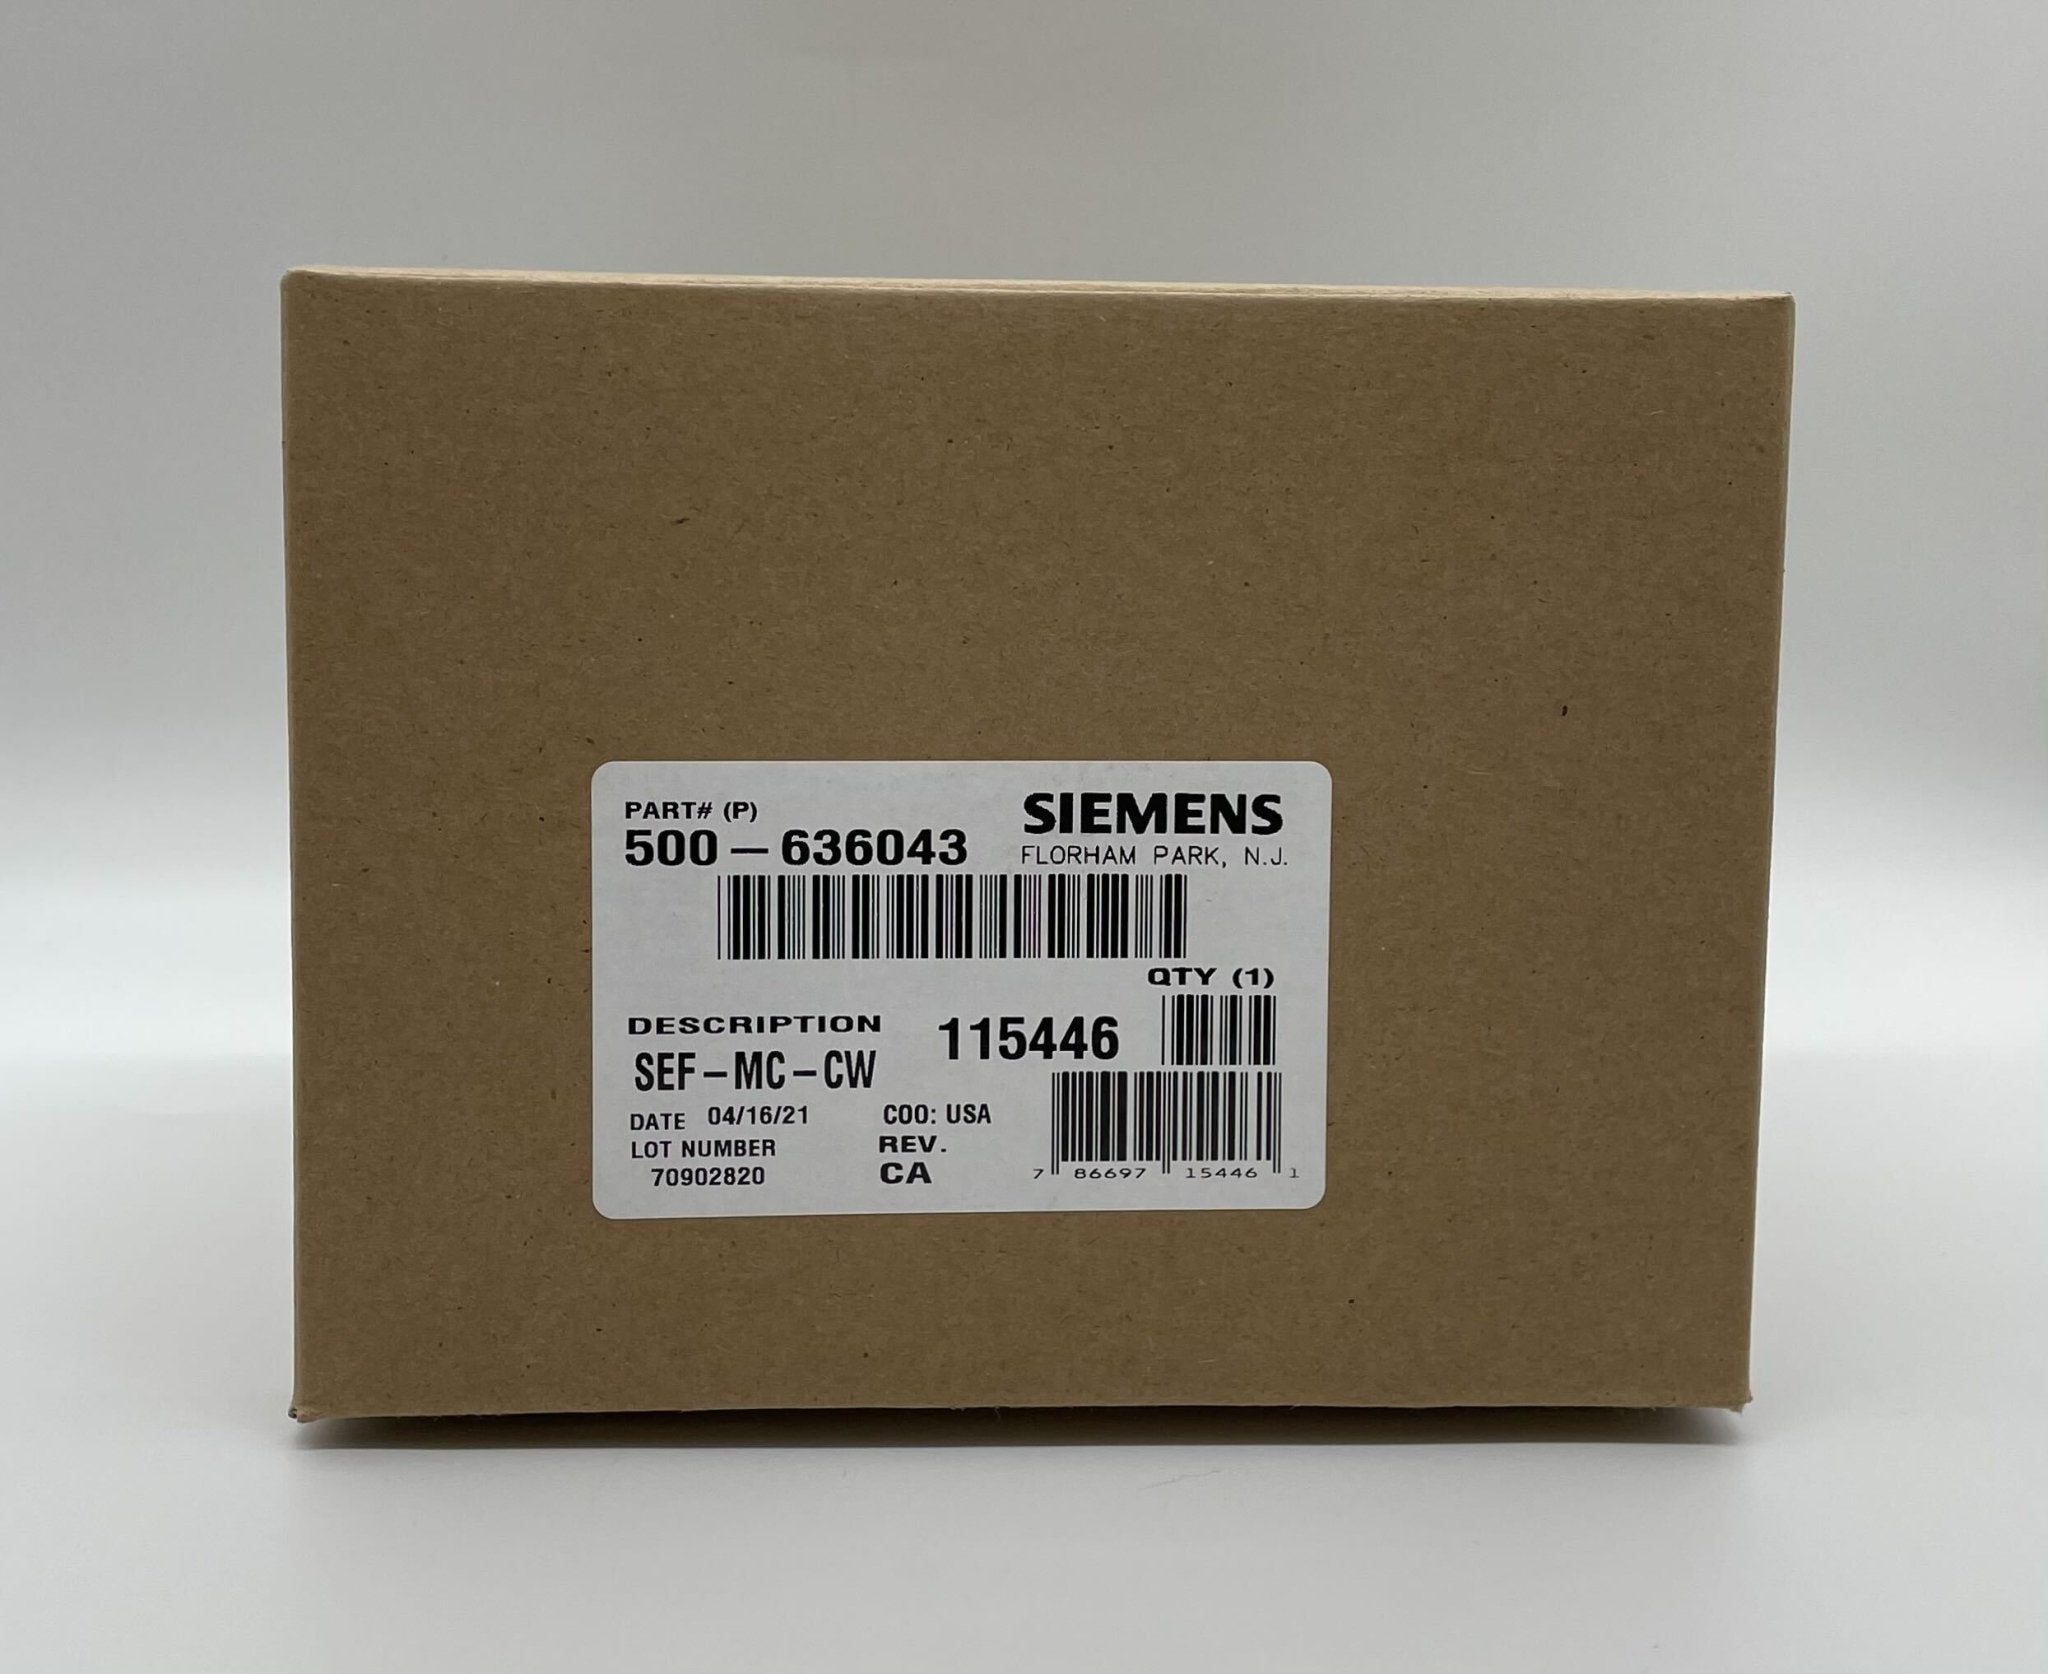 Siemens SEF-MC-CW - The Fire Alarm Supplier